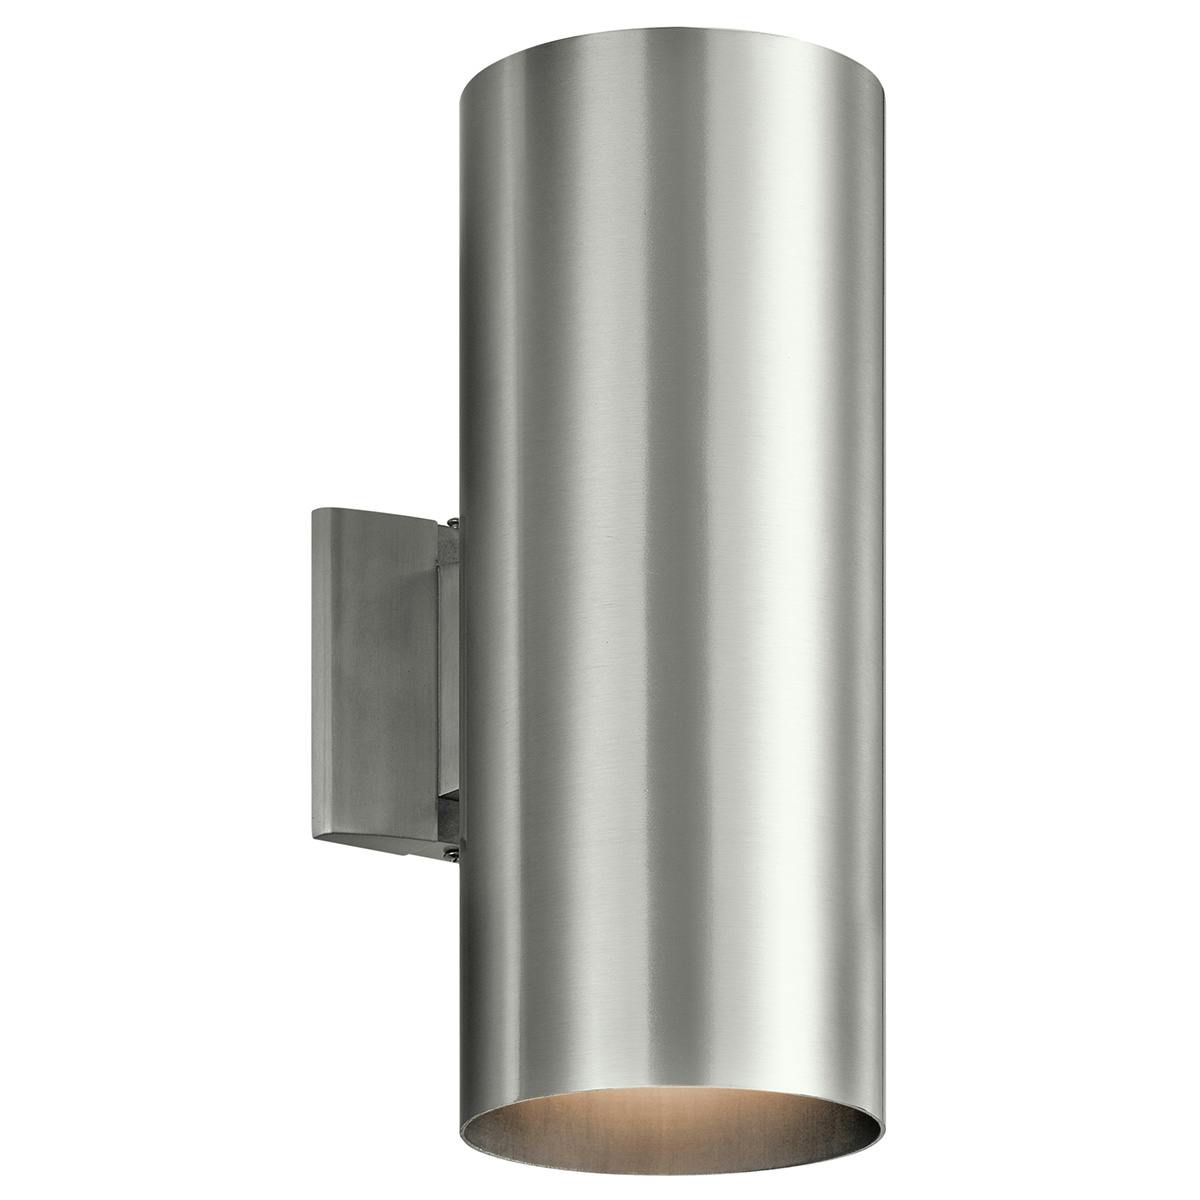 Cylinder 15" Wall Light Brushed Aluminum on a white background